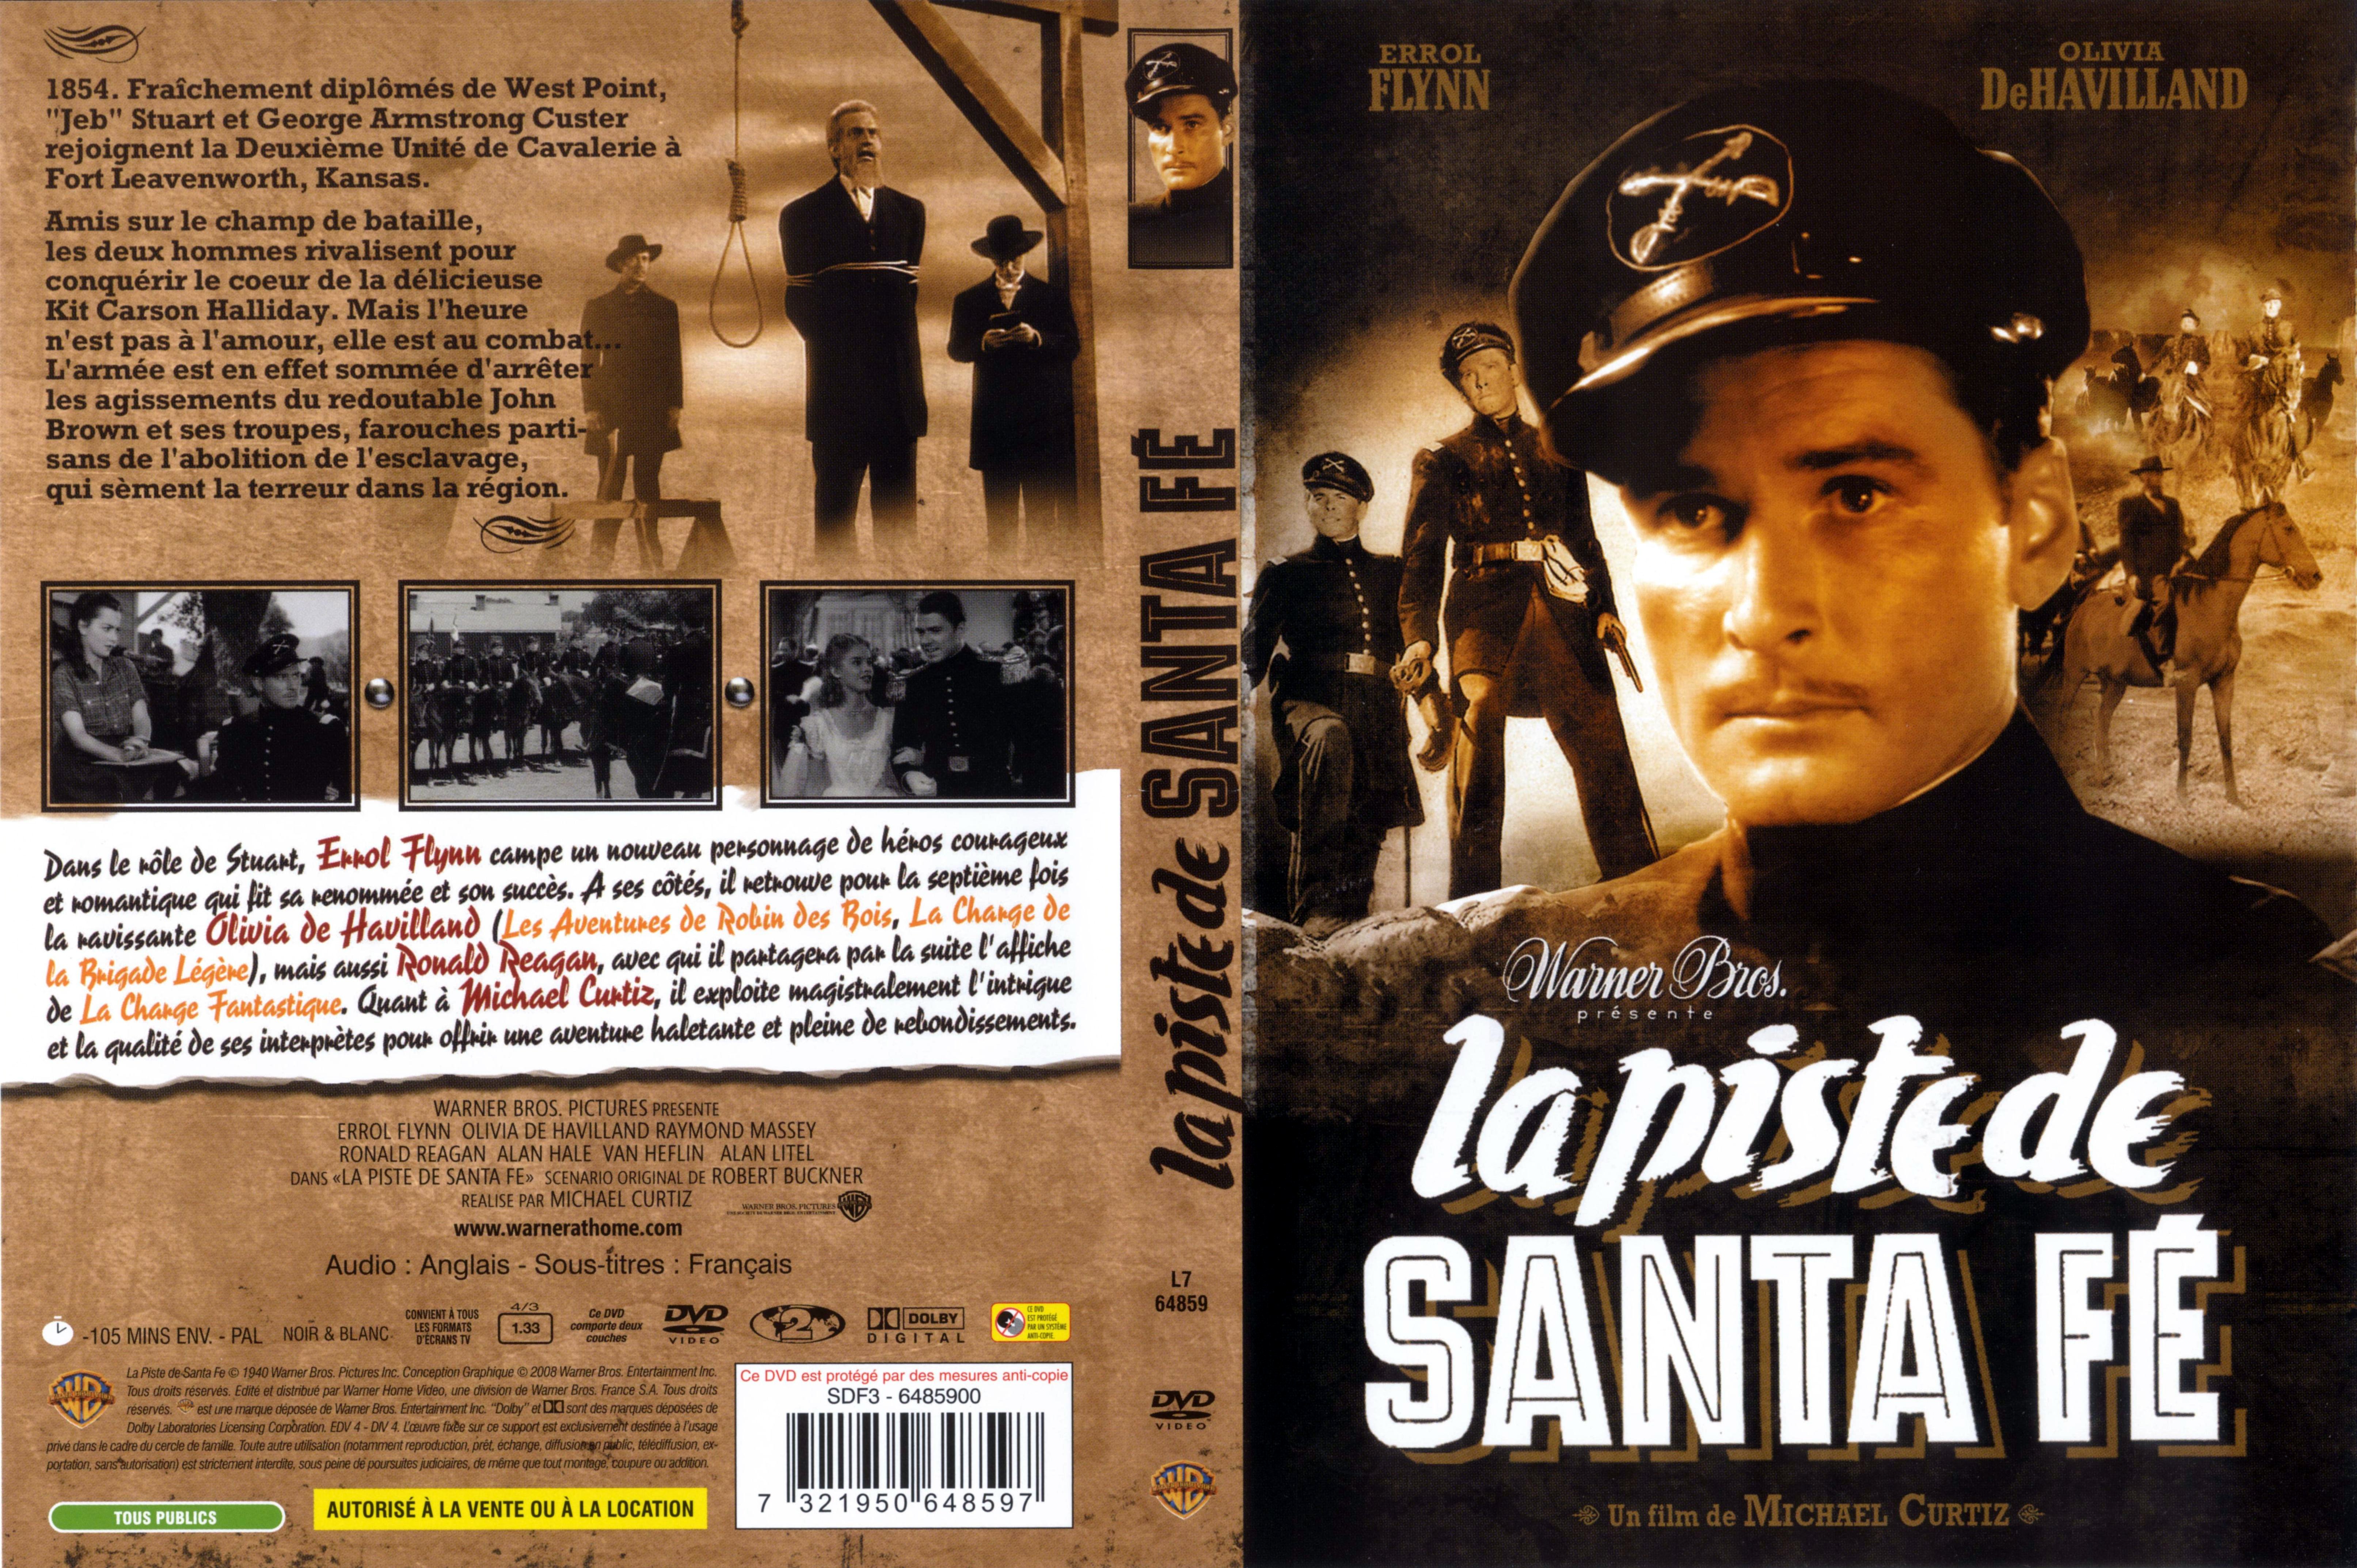 Jaquette DVD La piste de Santa Fe v3